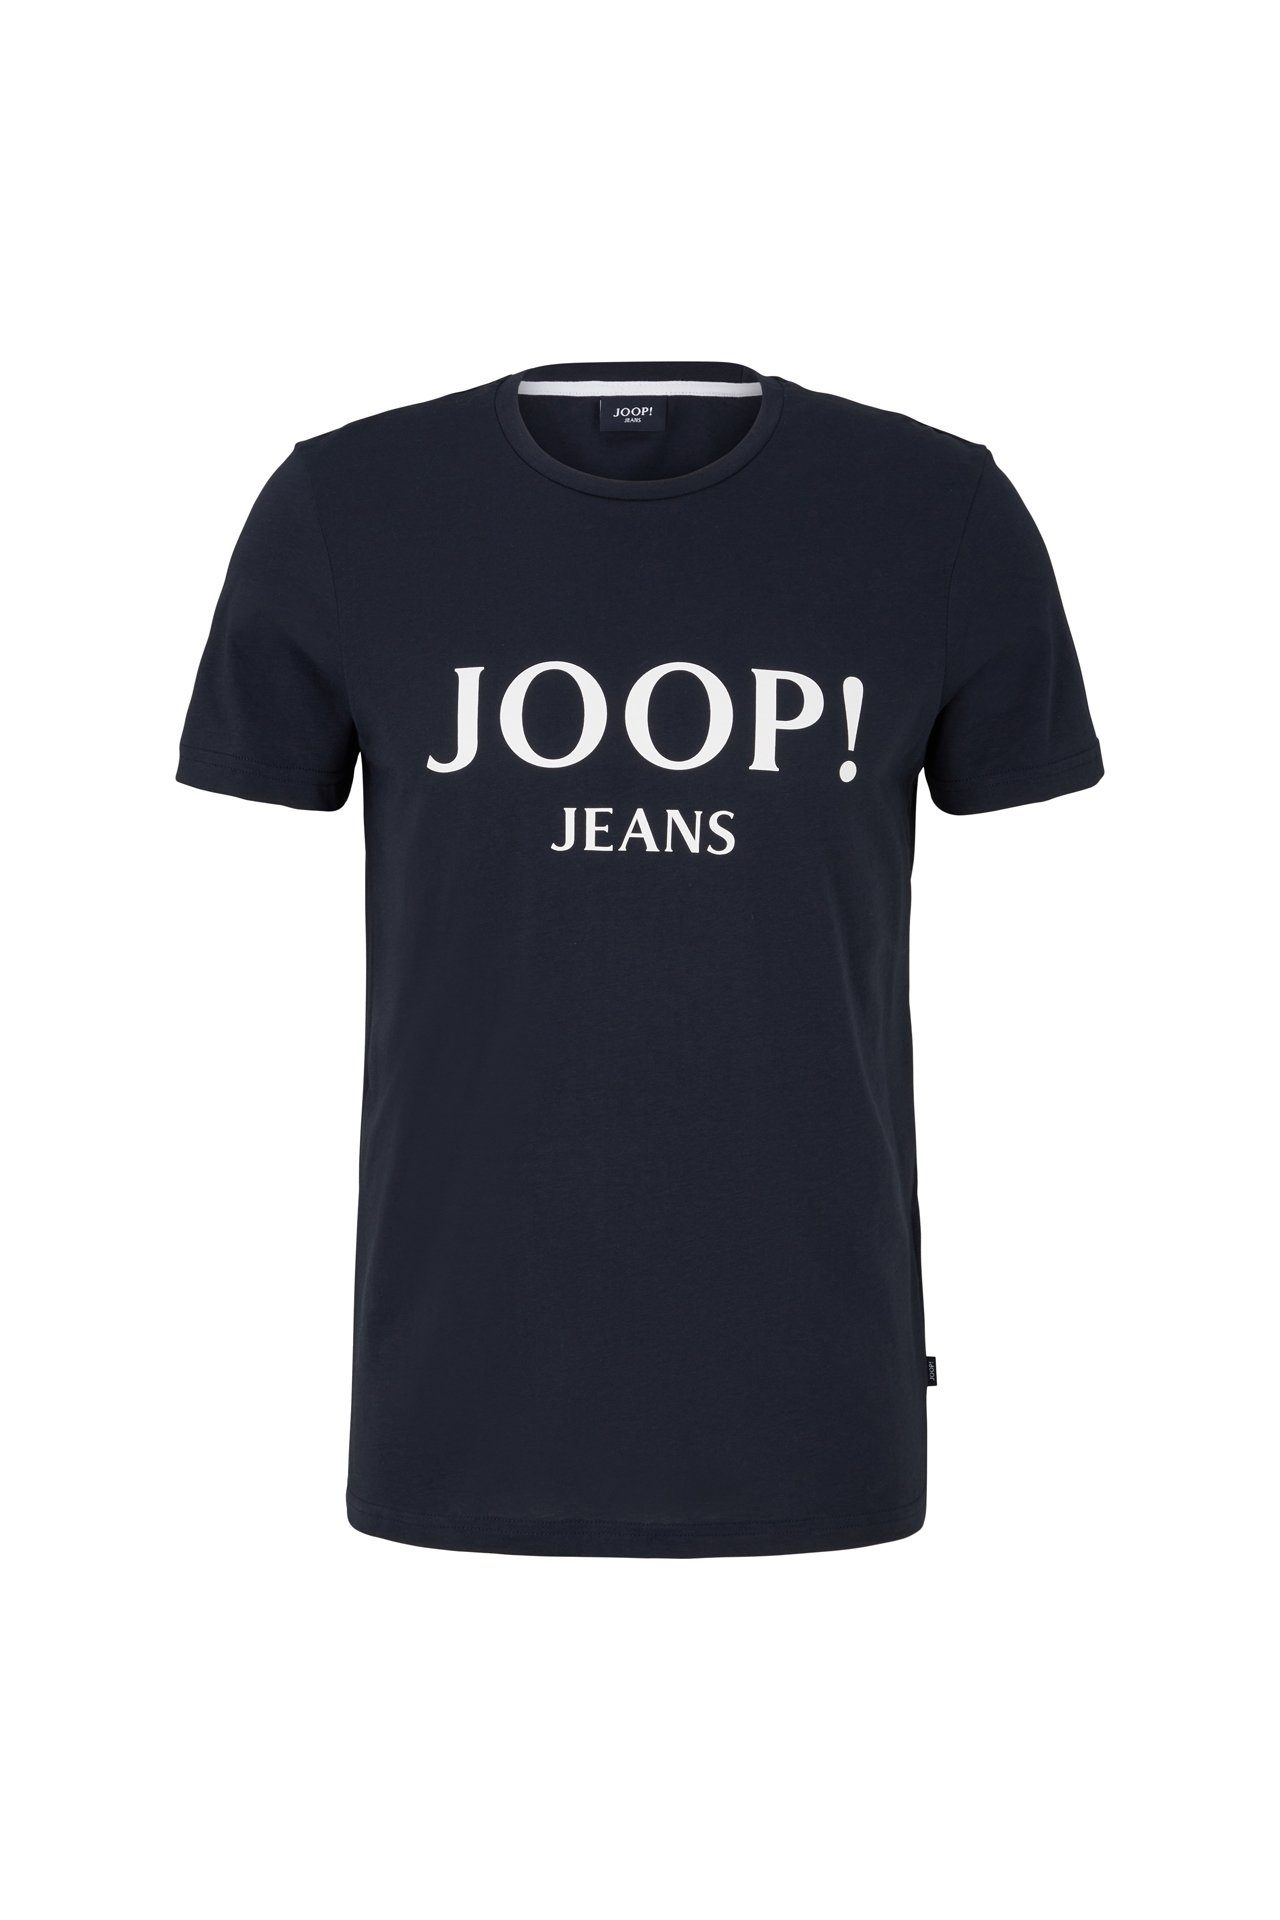 Joop Jeans T-Shirt Alex mit Logodruck